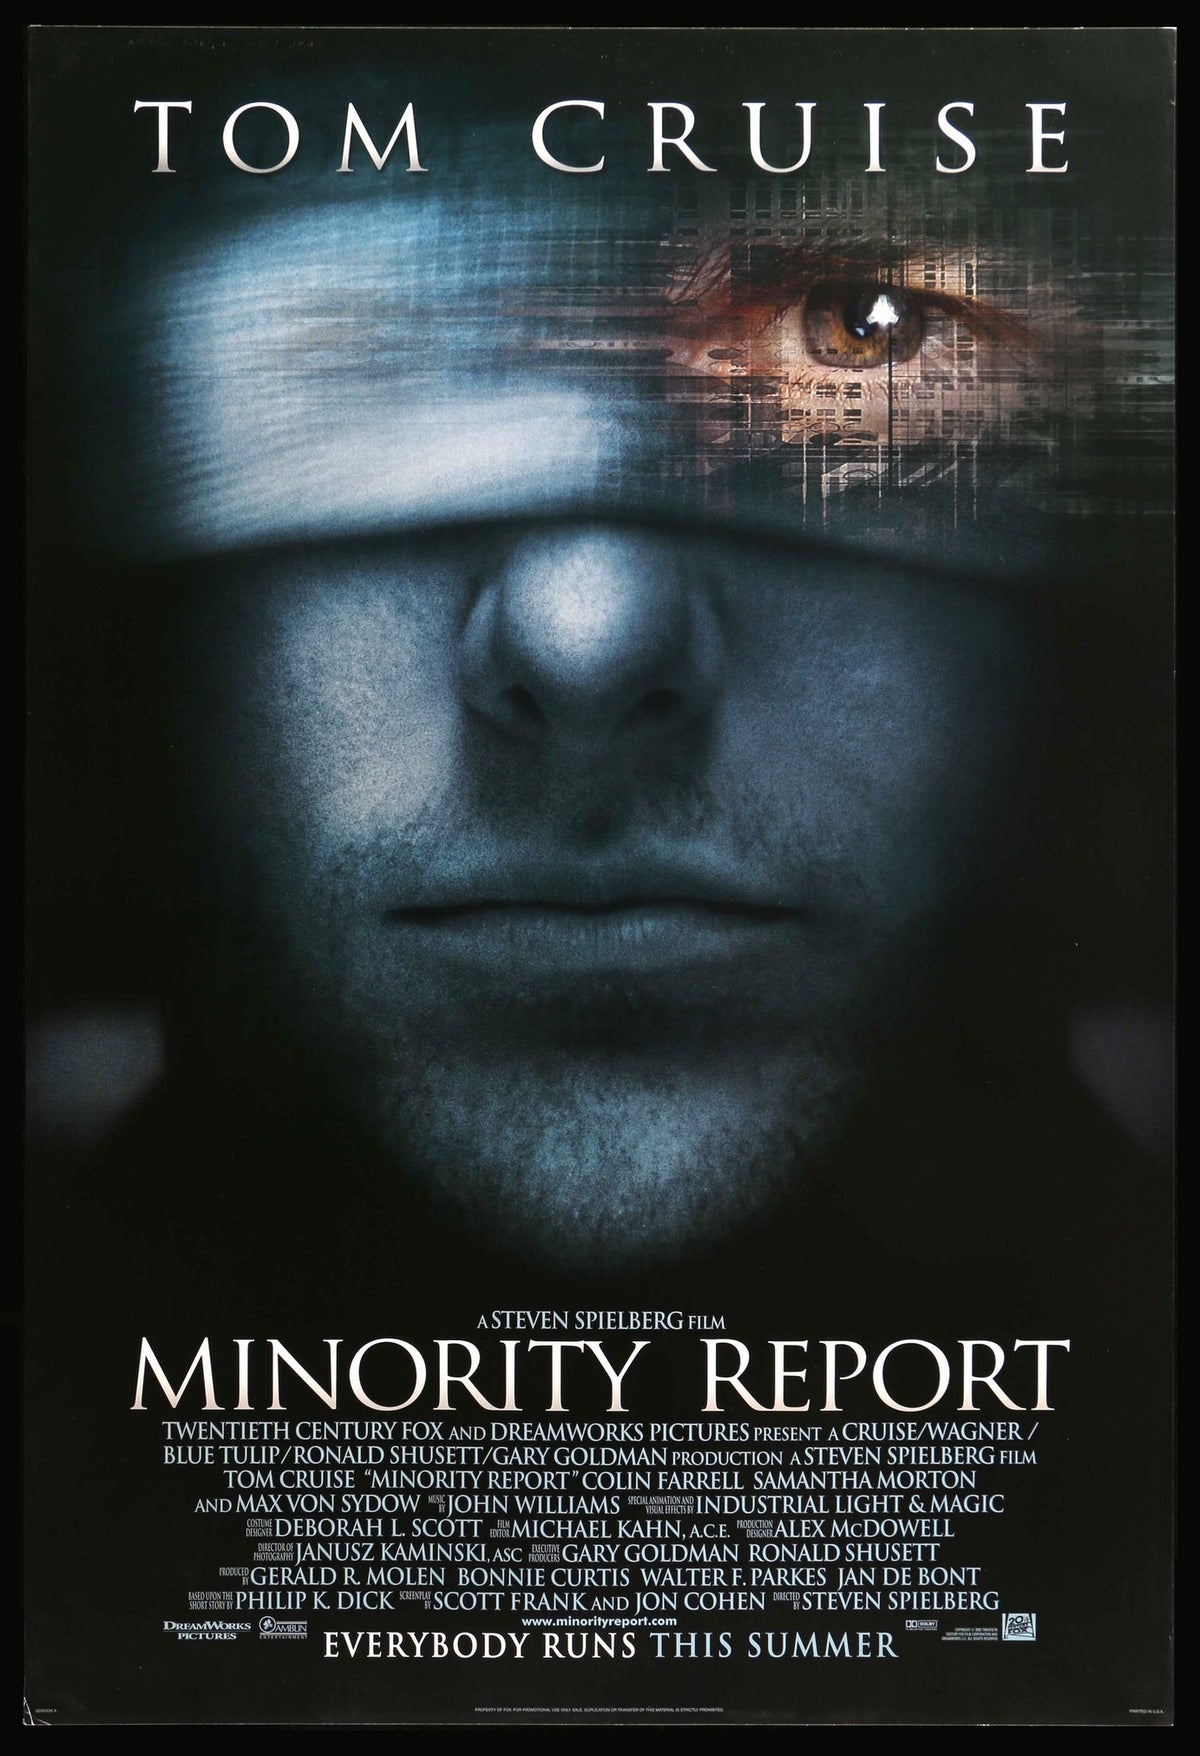 Minority Report (2002) original movie poster for sale at Original Film Art